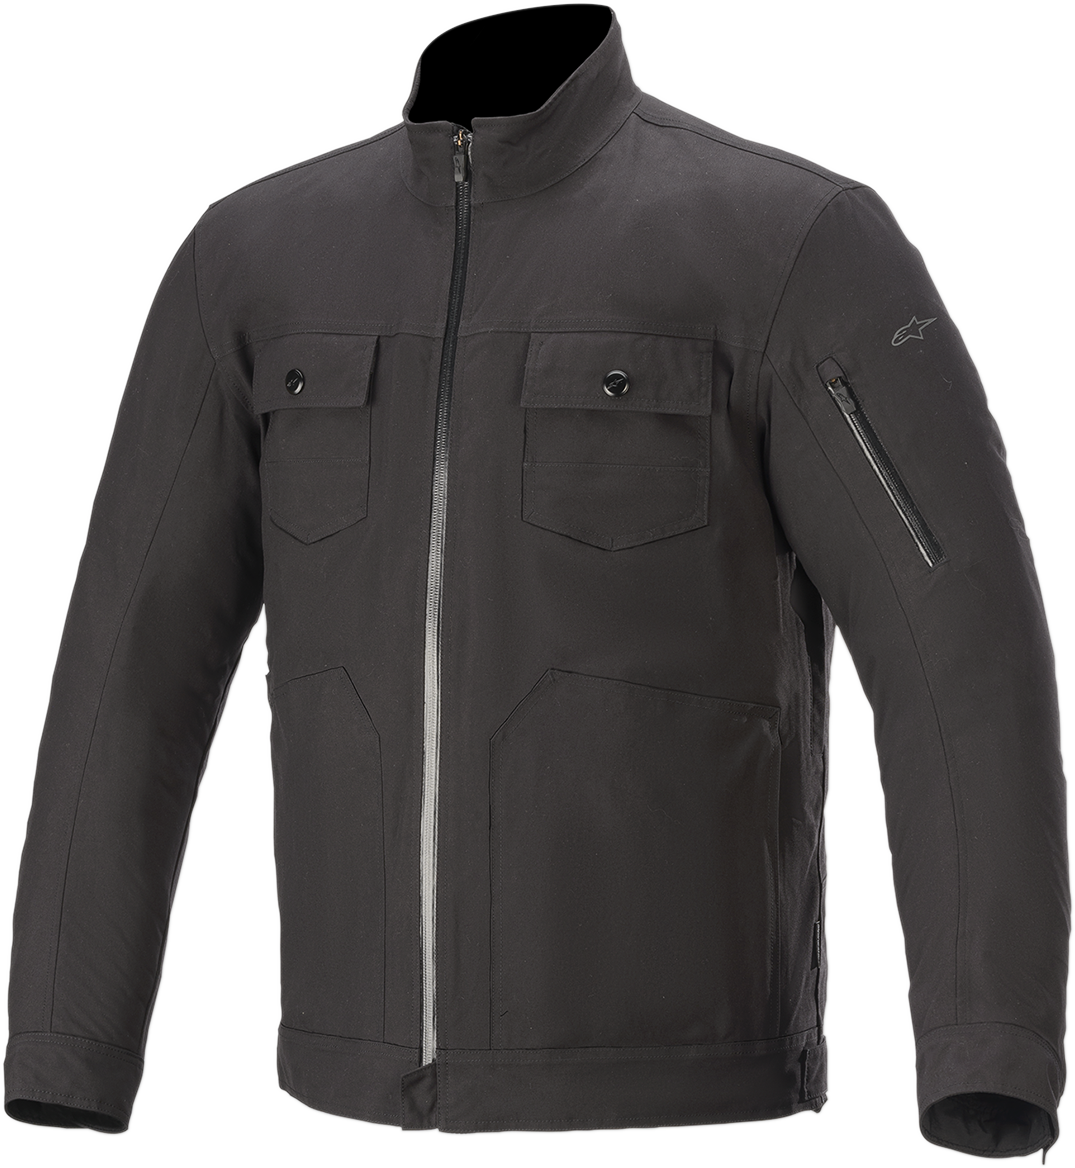 ALPINESTARS Solano Waterproof Jacket - Black - 4XL 3209020-10-4X